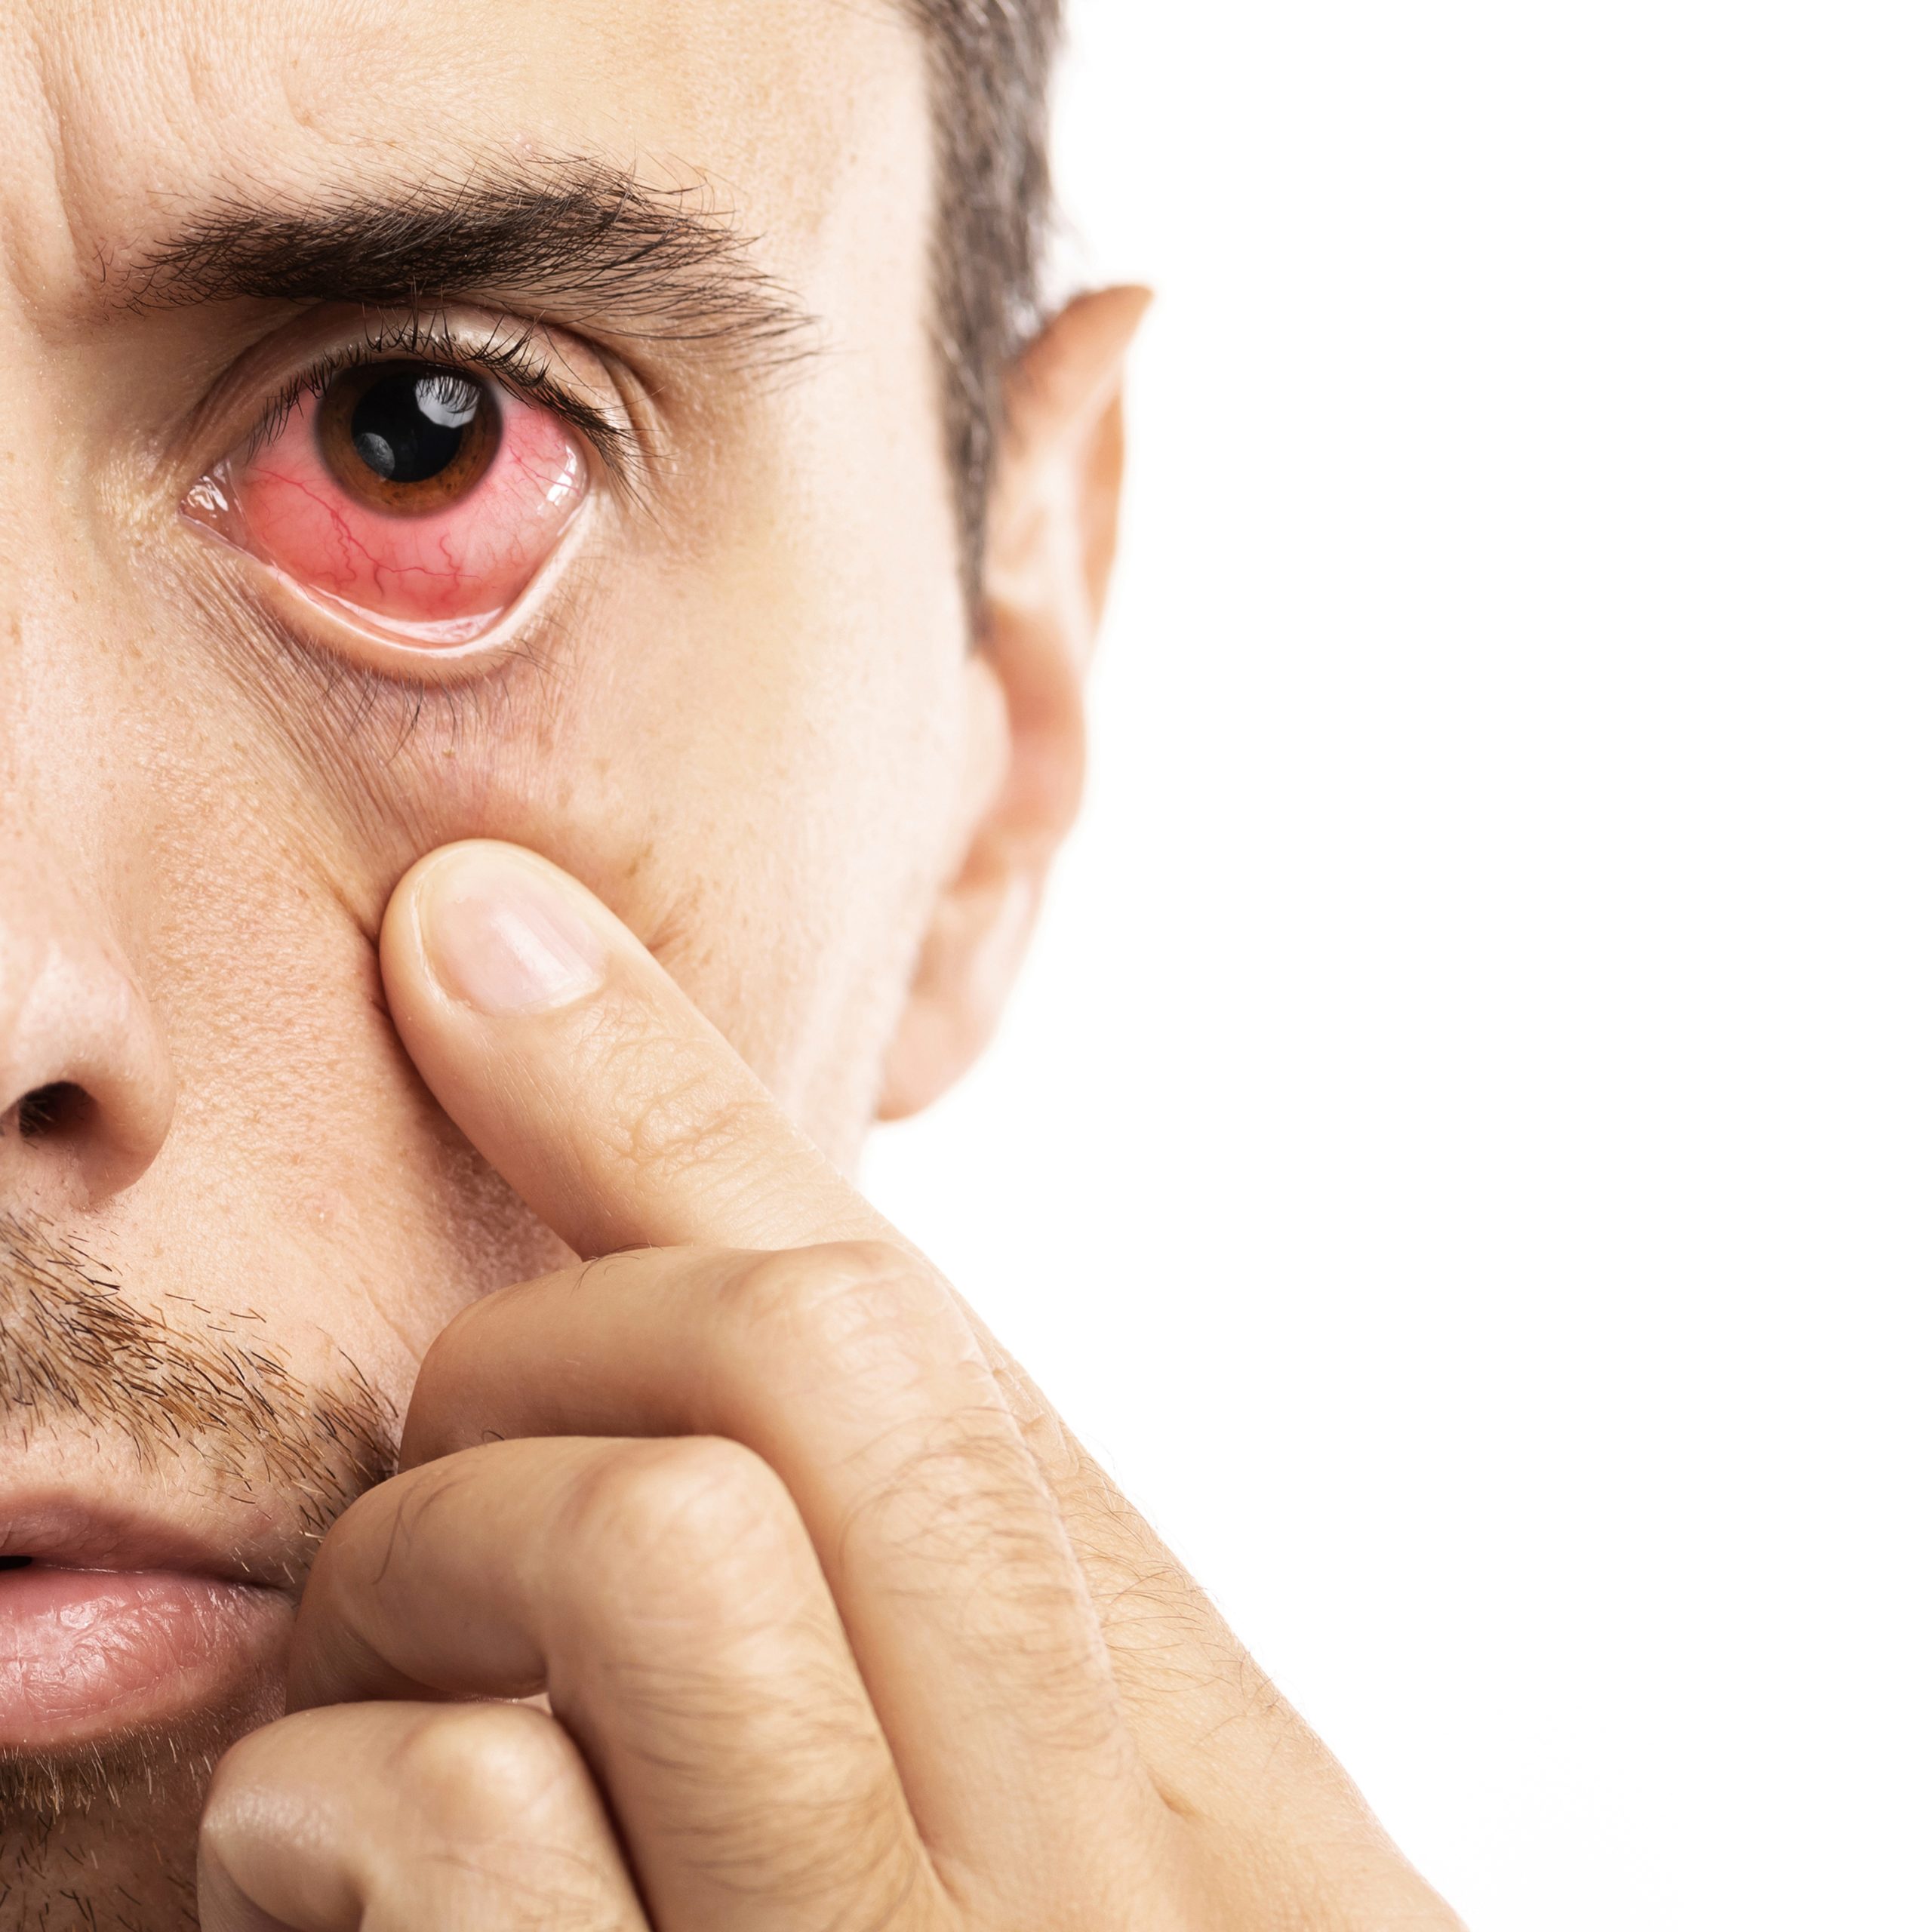 Subconjunctival Hemorrhage (Eye Bleeding)